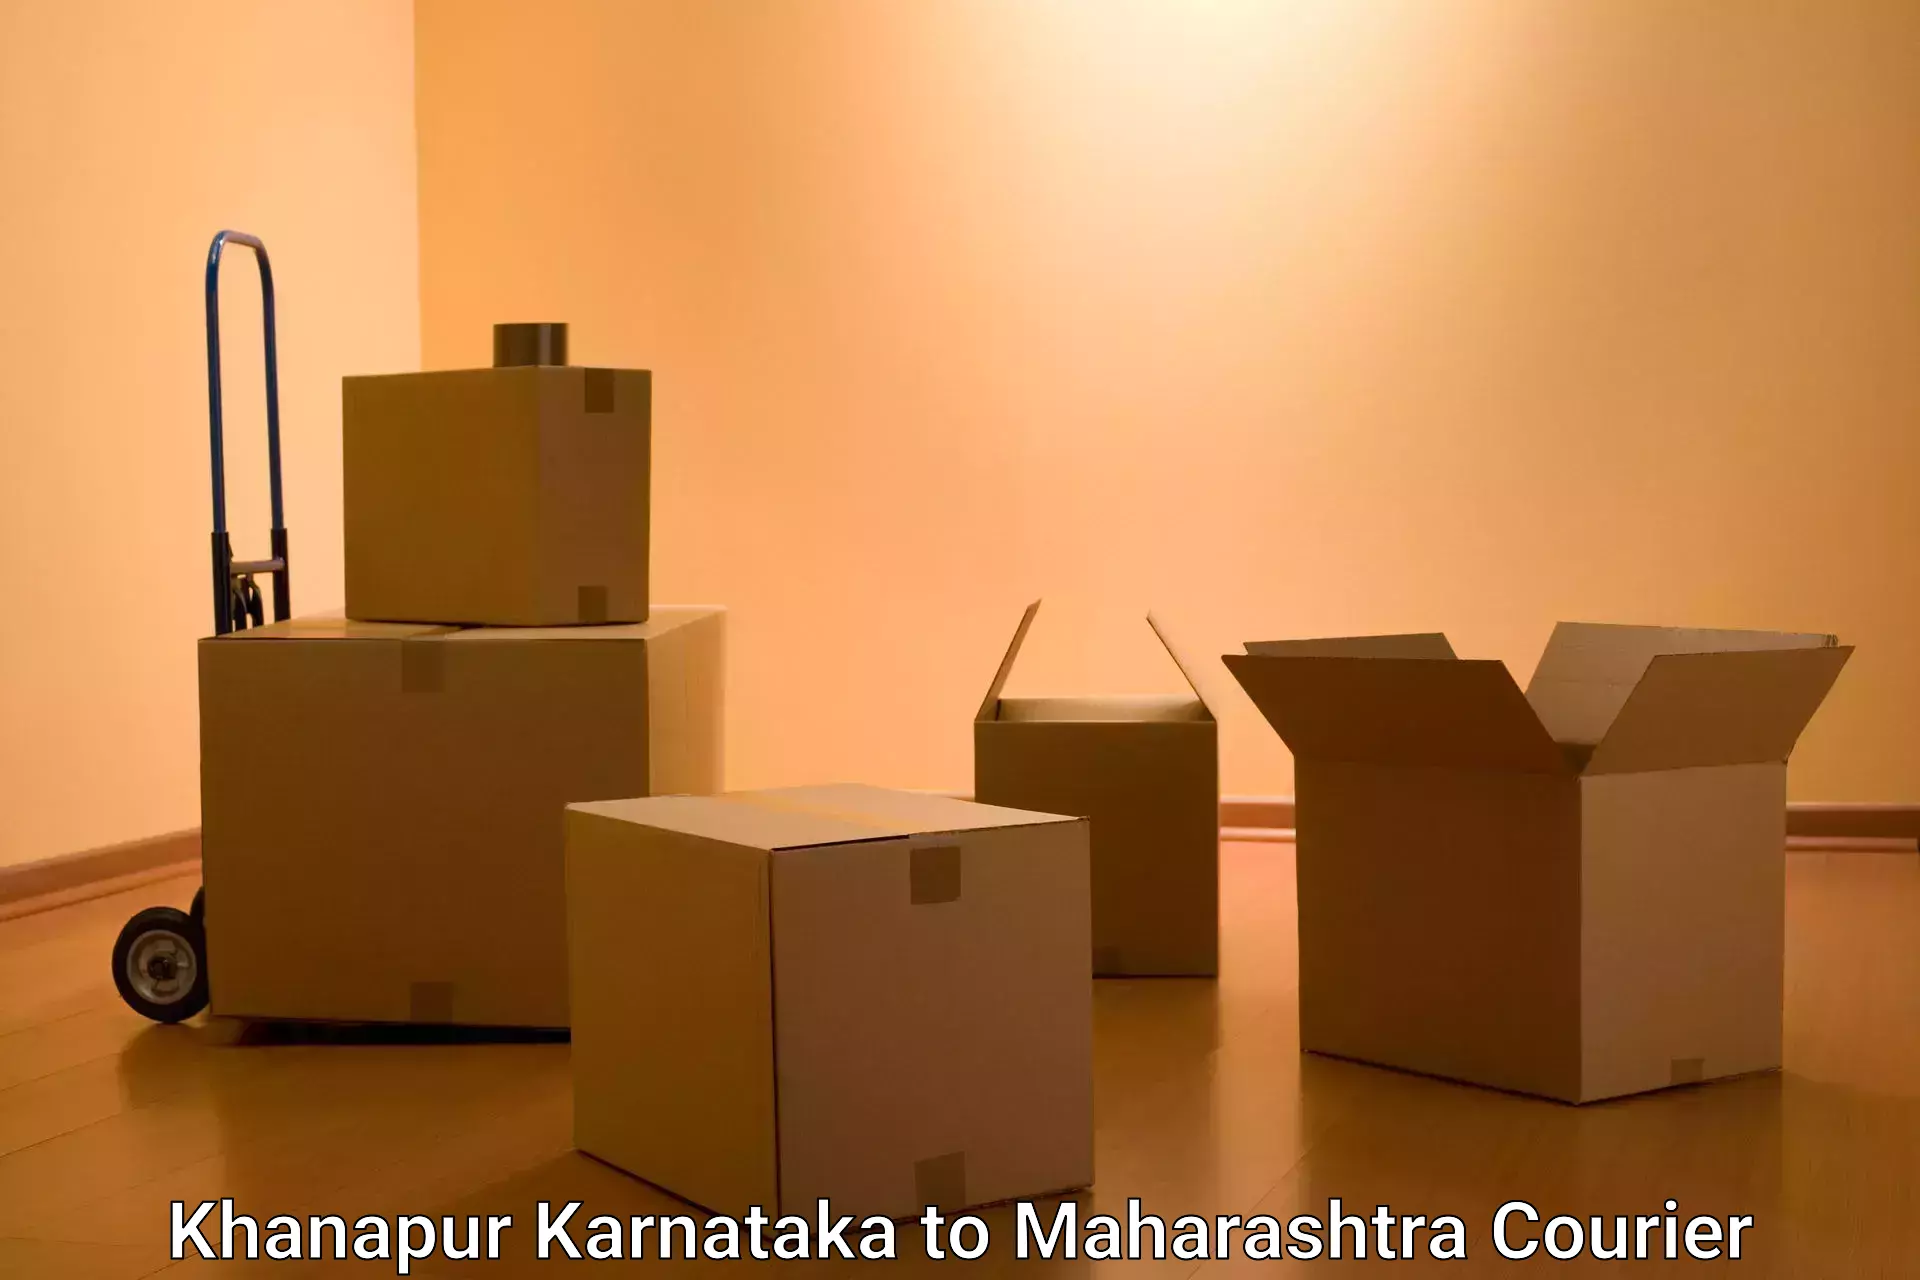 Parcel delivery automation Khanapur Karnataka to Mumbai